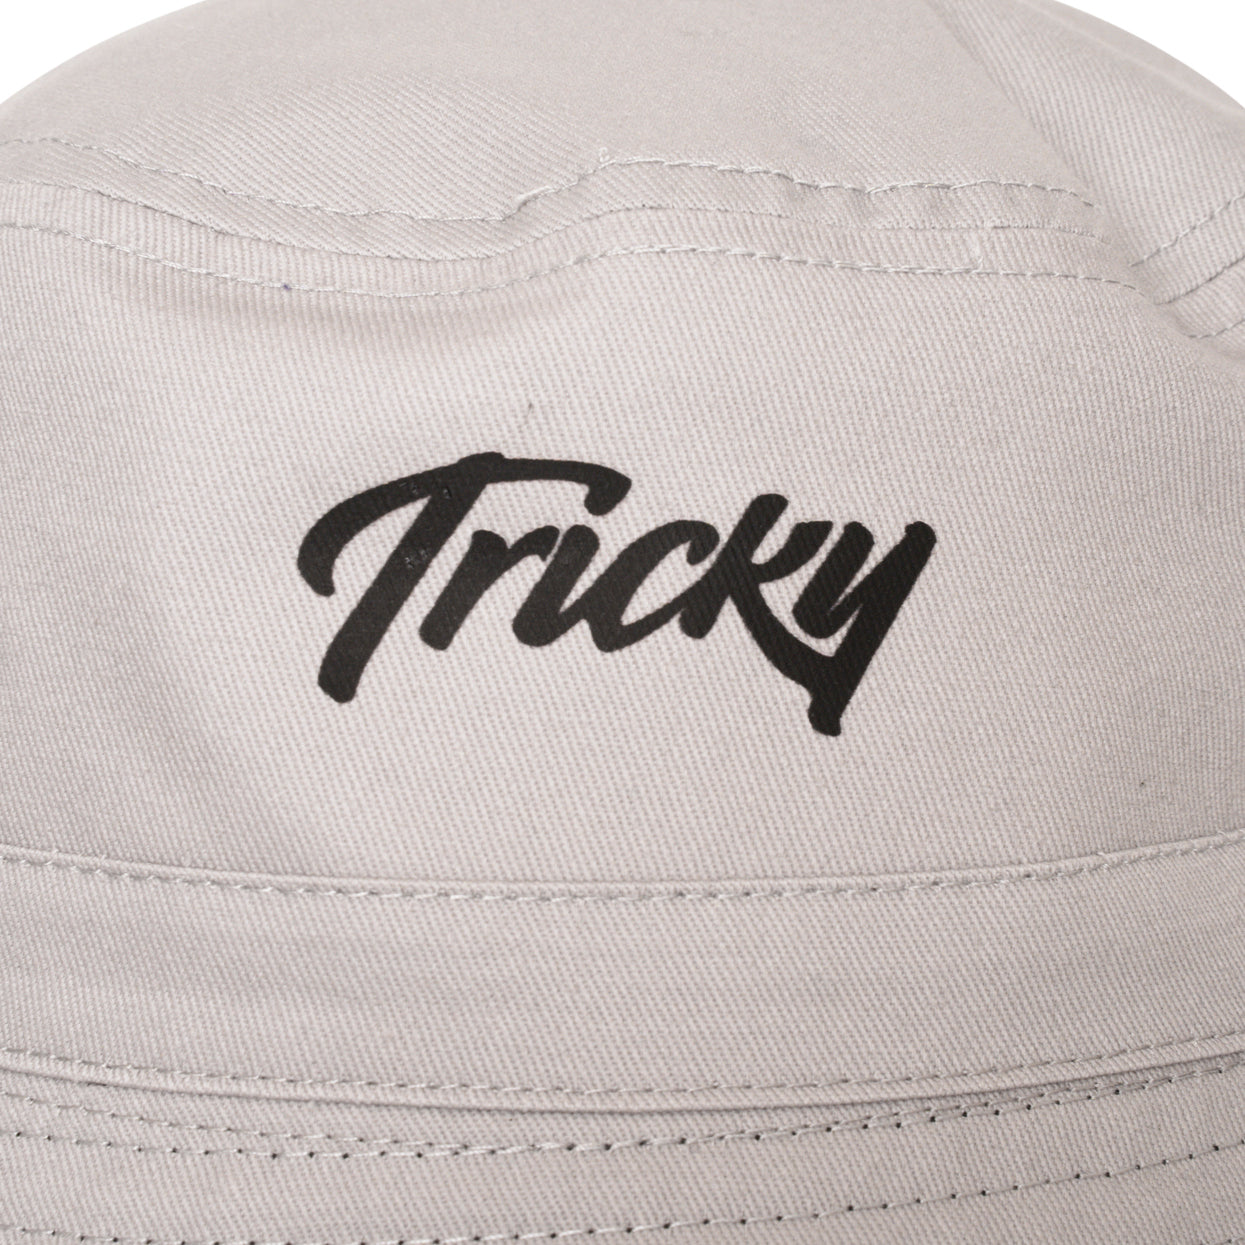 TRICKY SMALL LOGO BUCKET HAT GREY